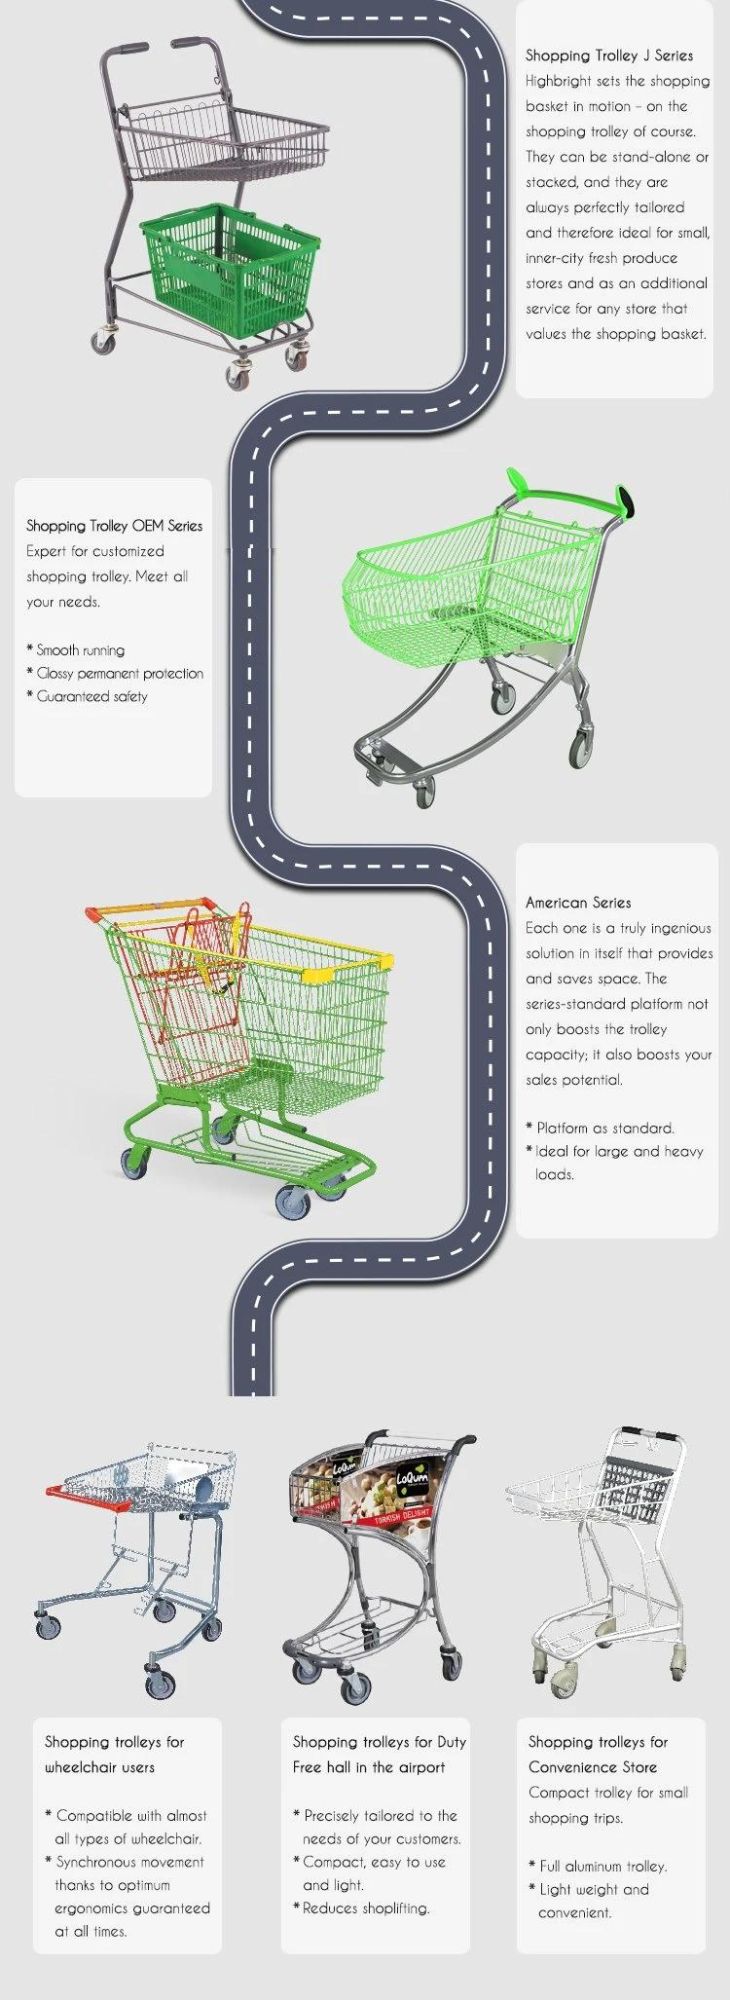 Metal Plastic Powder Coating Shopping Carts with Travelator Castors